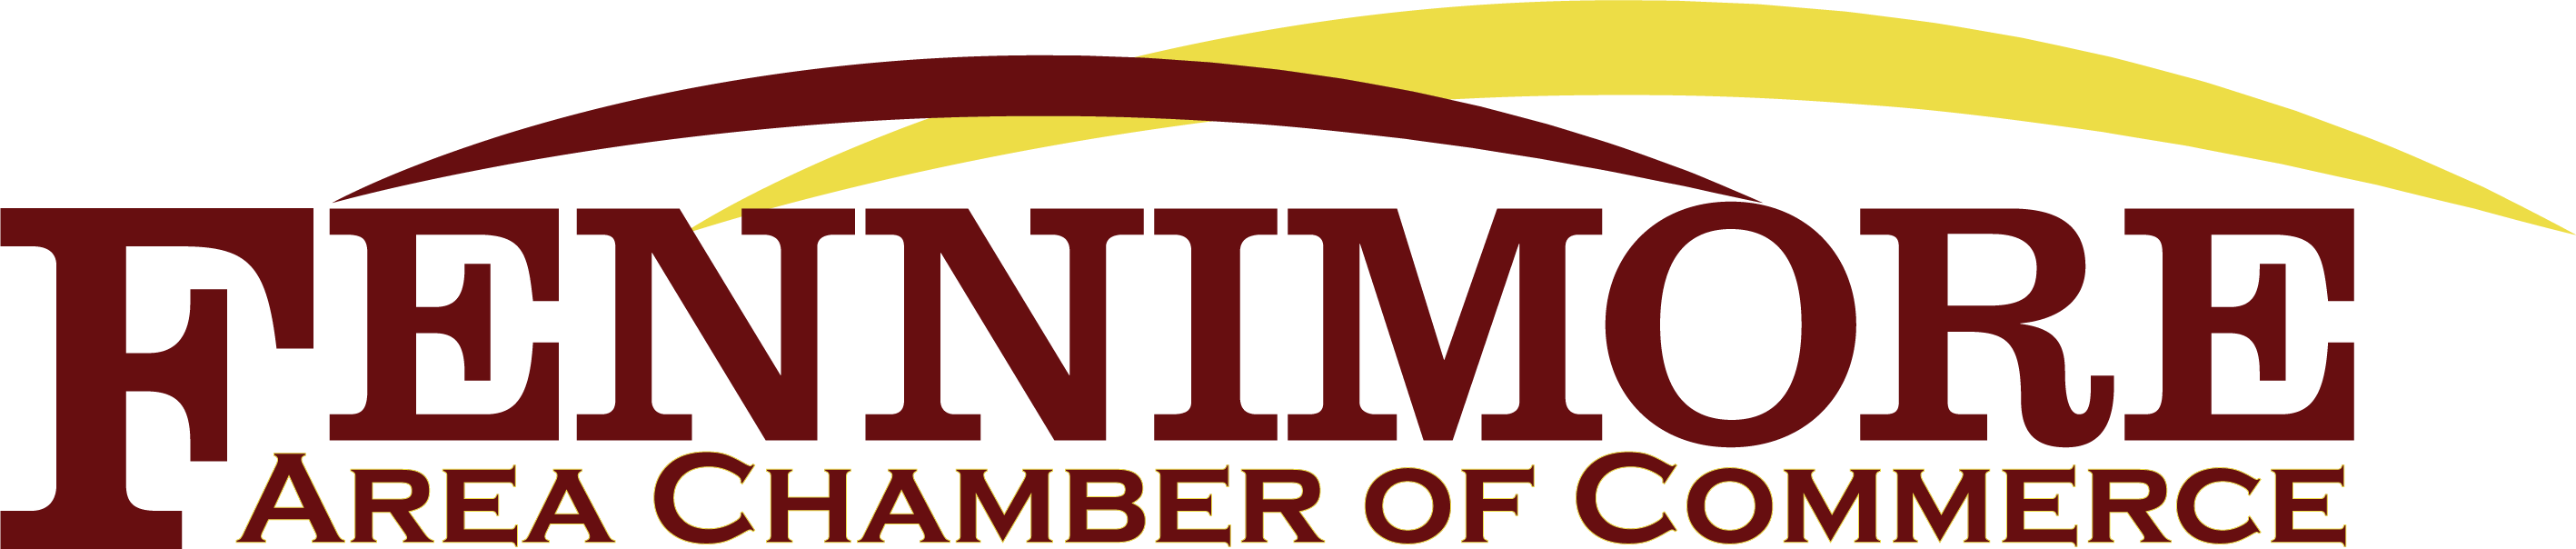 Fennimore Area Chamber of Commerce